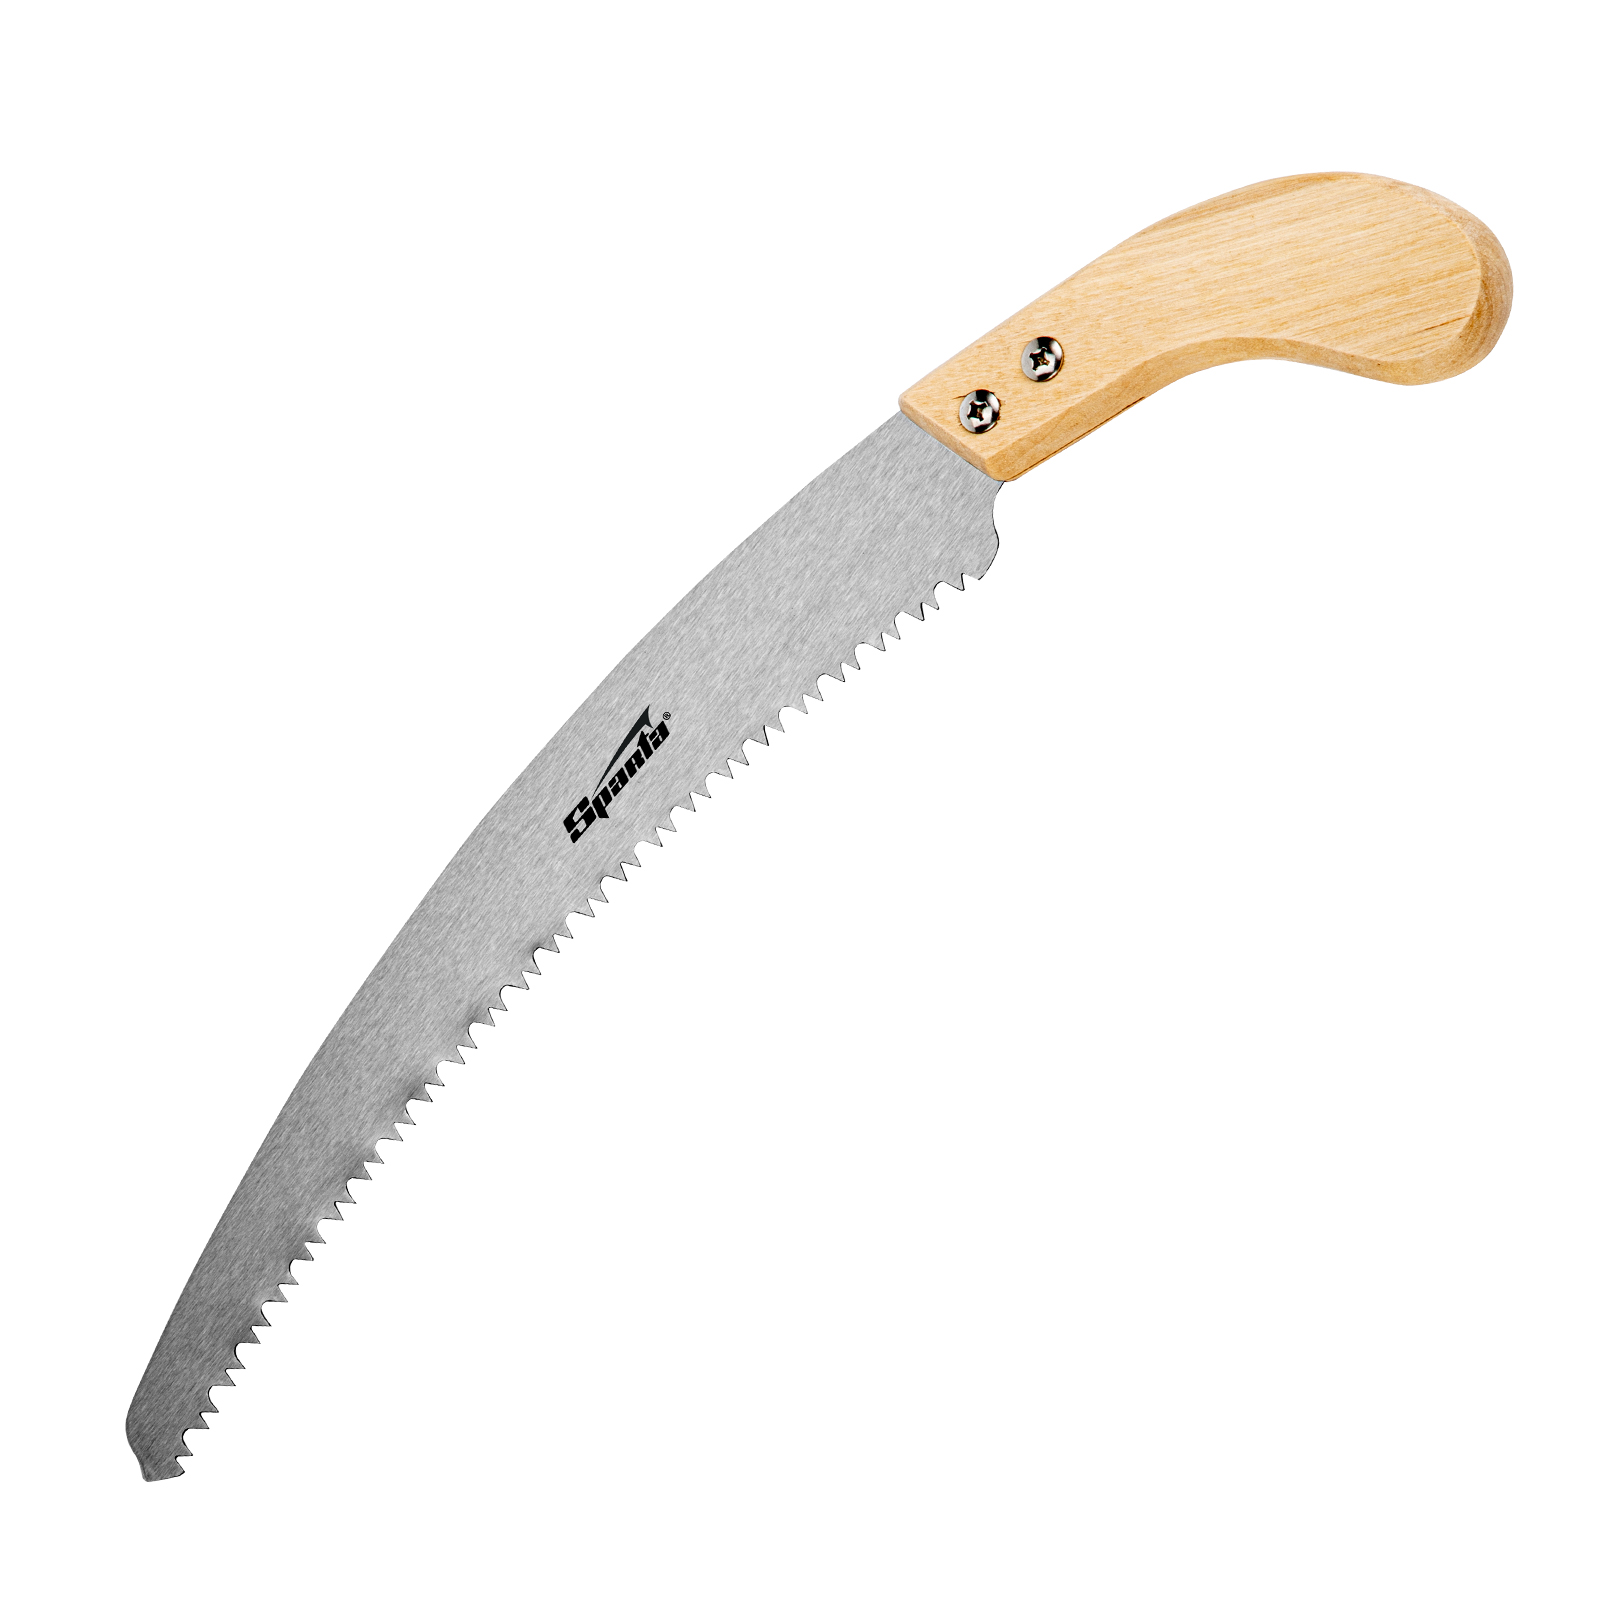 Садовая ножовка SPARTA 230335 ножовка садовая 270 мм деревянная ручка